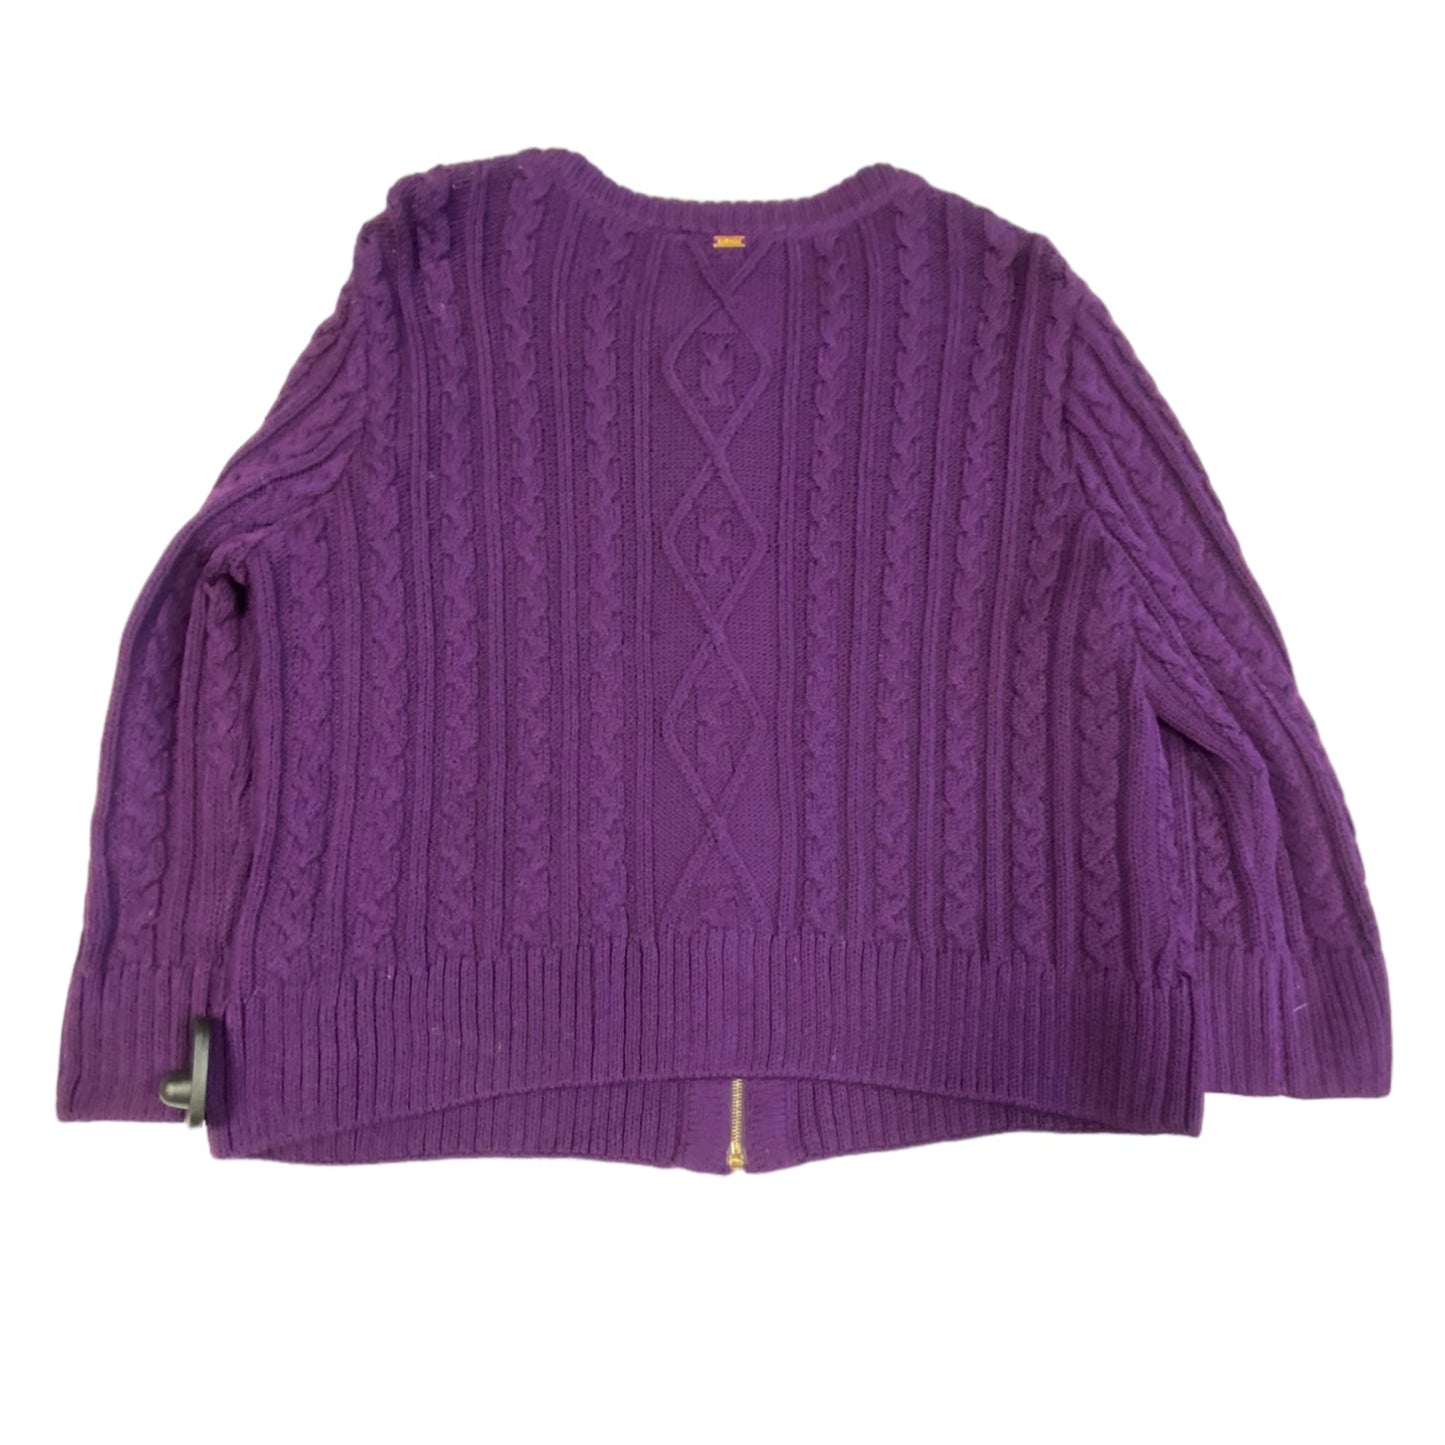 Sweater Designer By St John Knits  Size: S